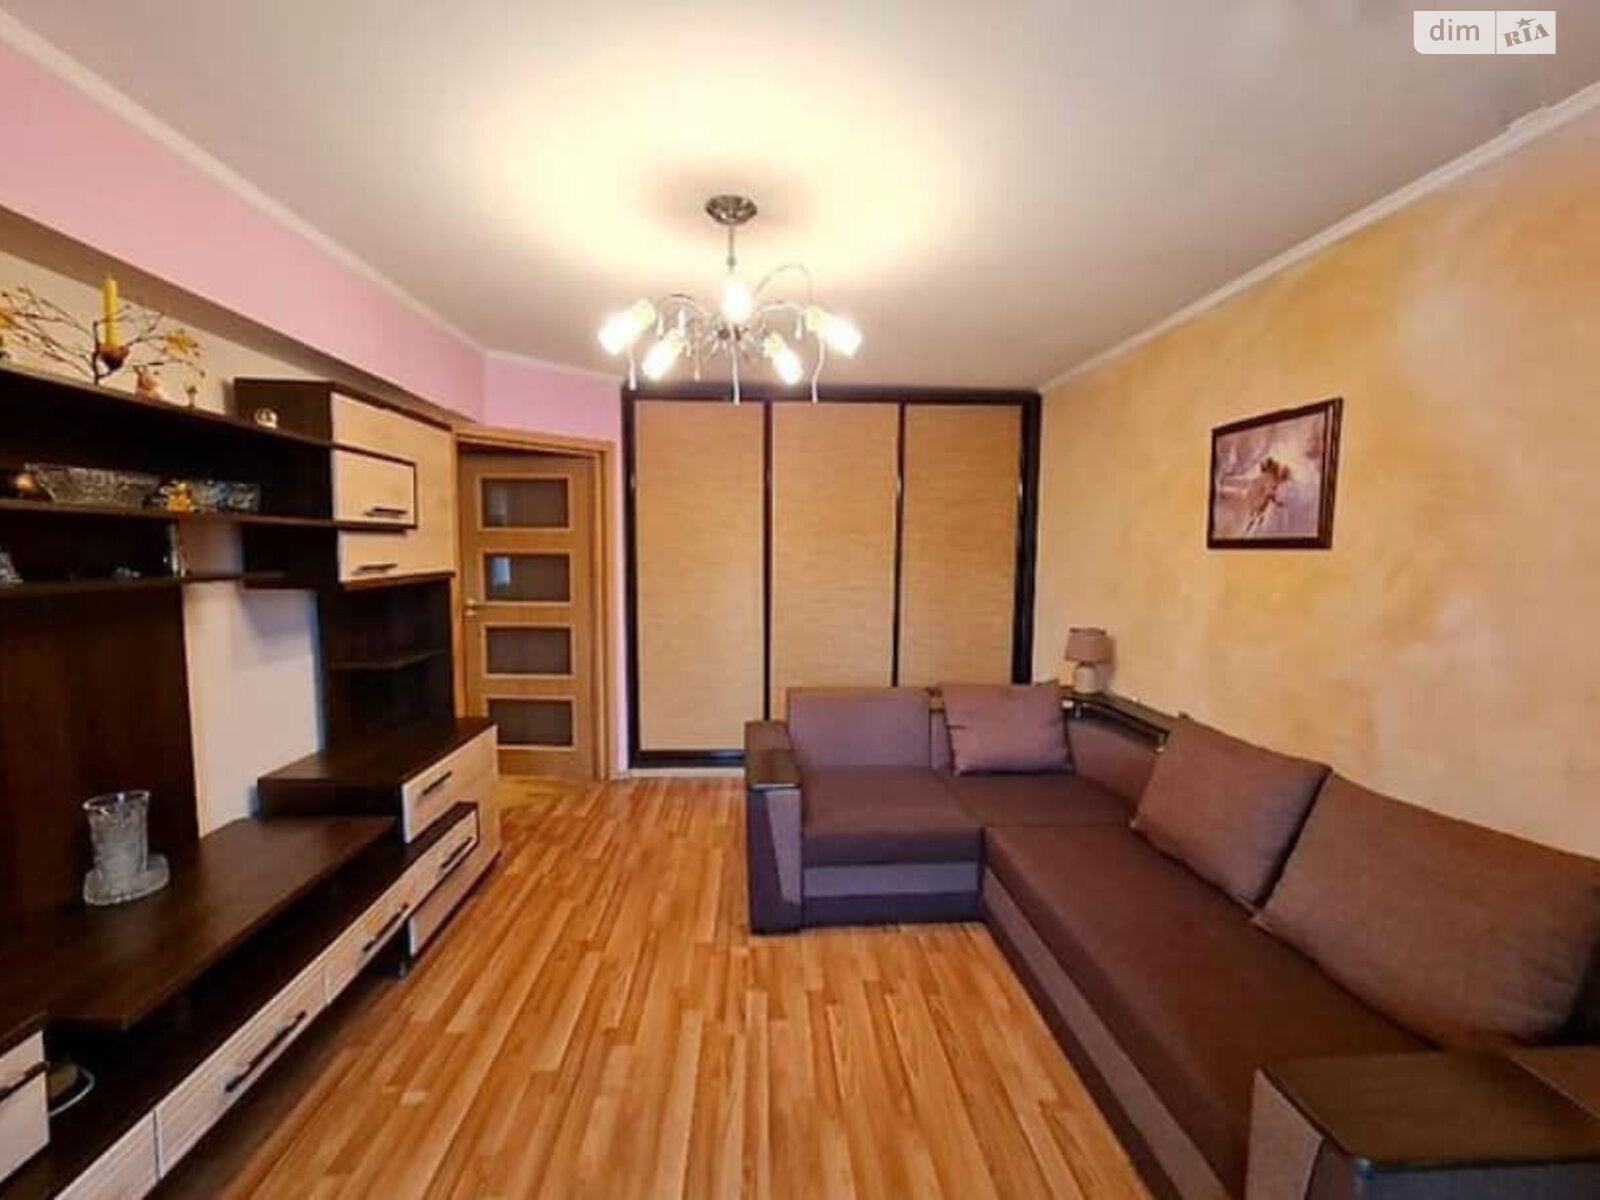 Продаж двокімнатної квартири в Хмельницькому, на просп. Миру 76, район Виставка фото 1